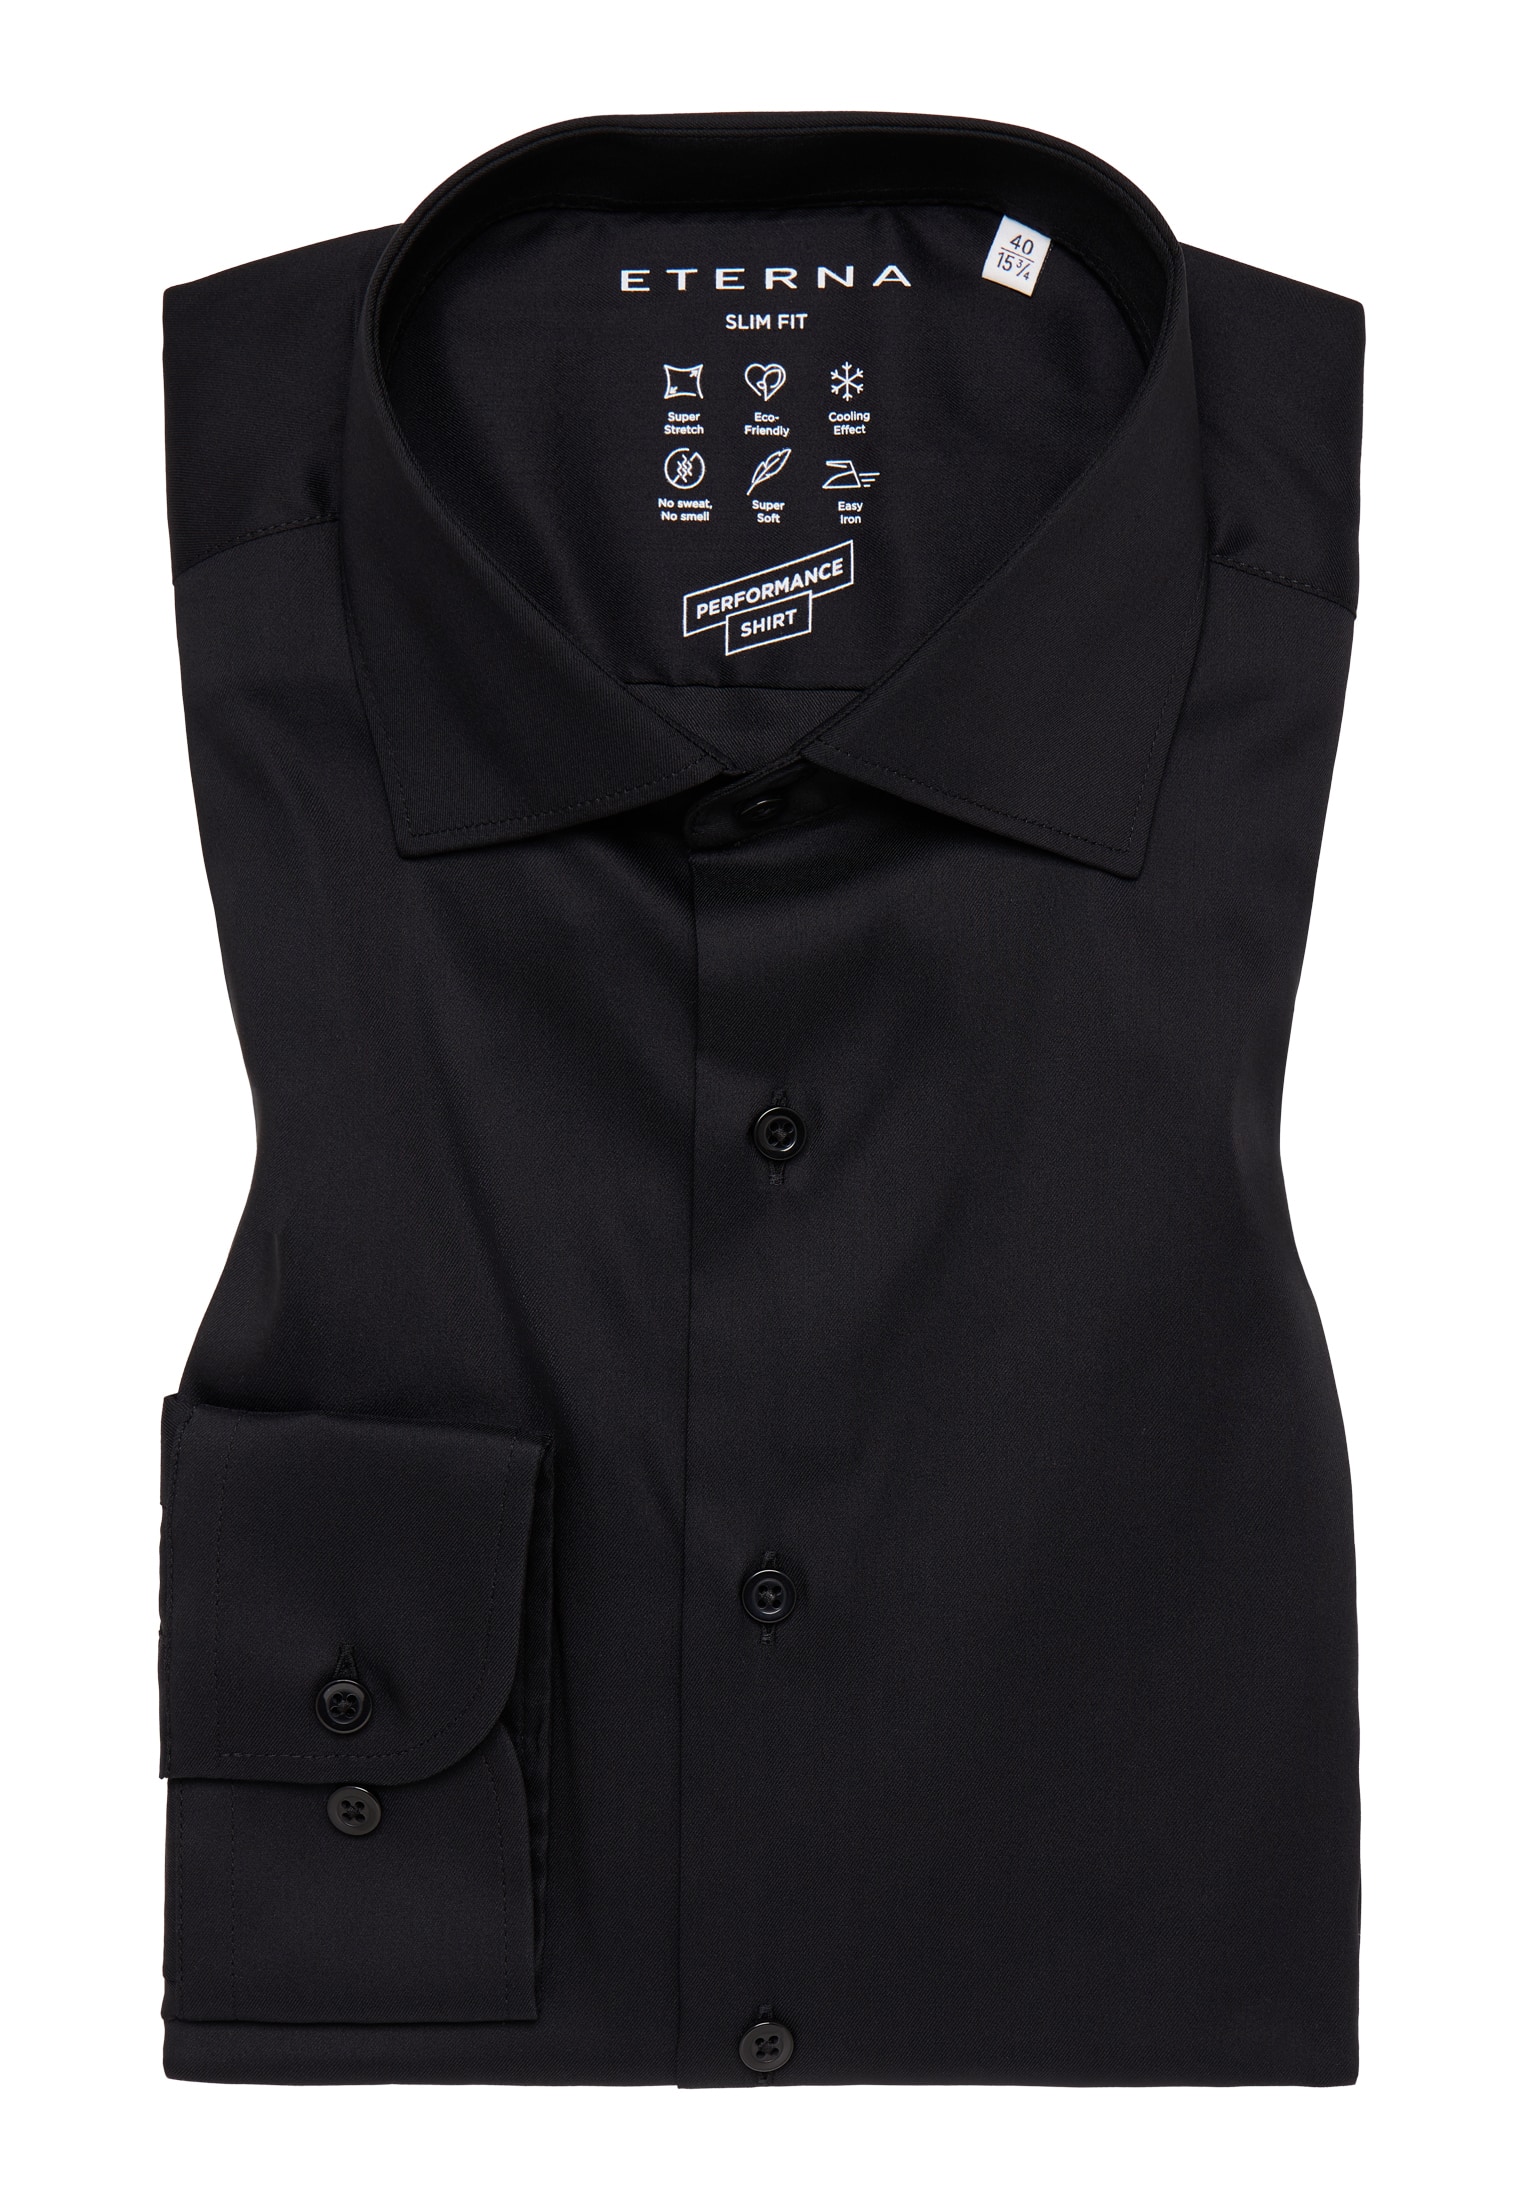 SLIM FIT Performance black 38 long | Shirt plain | | sleeve black 1SH02217-03-91-38-1/1 | in